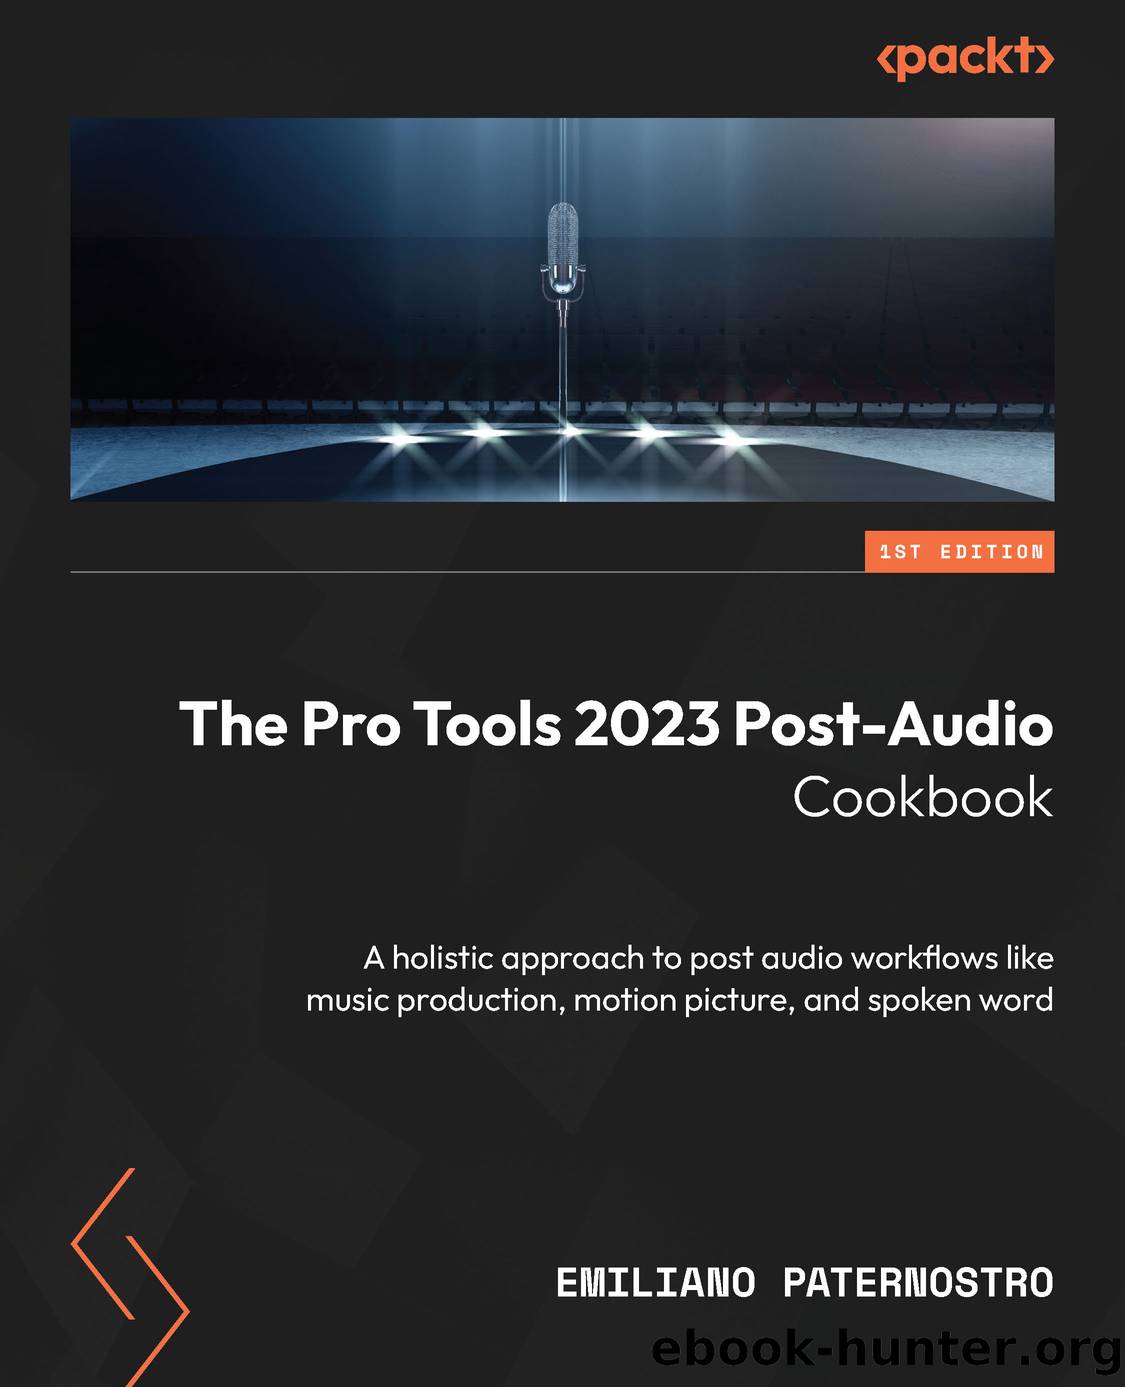 The Pro Tools 2023 Post-Audio Cookbook by Emiliano Paternostro